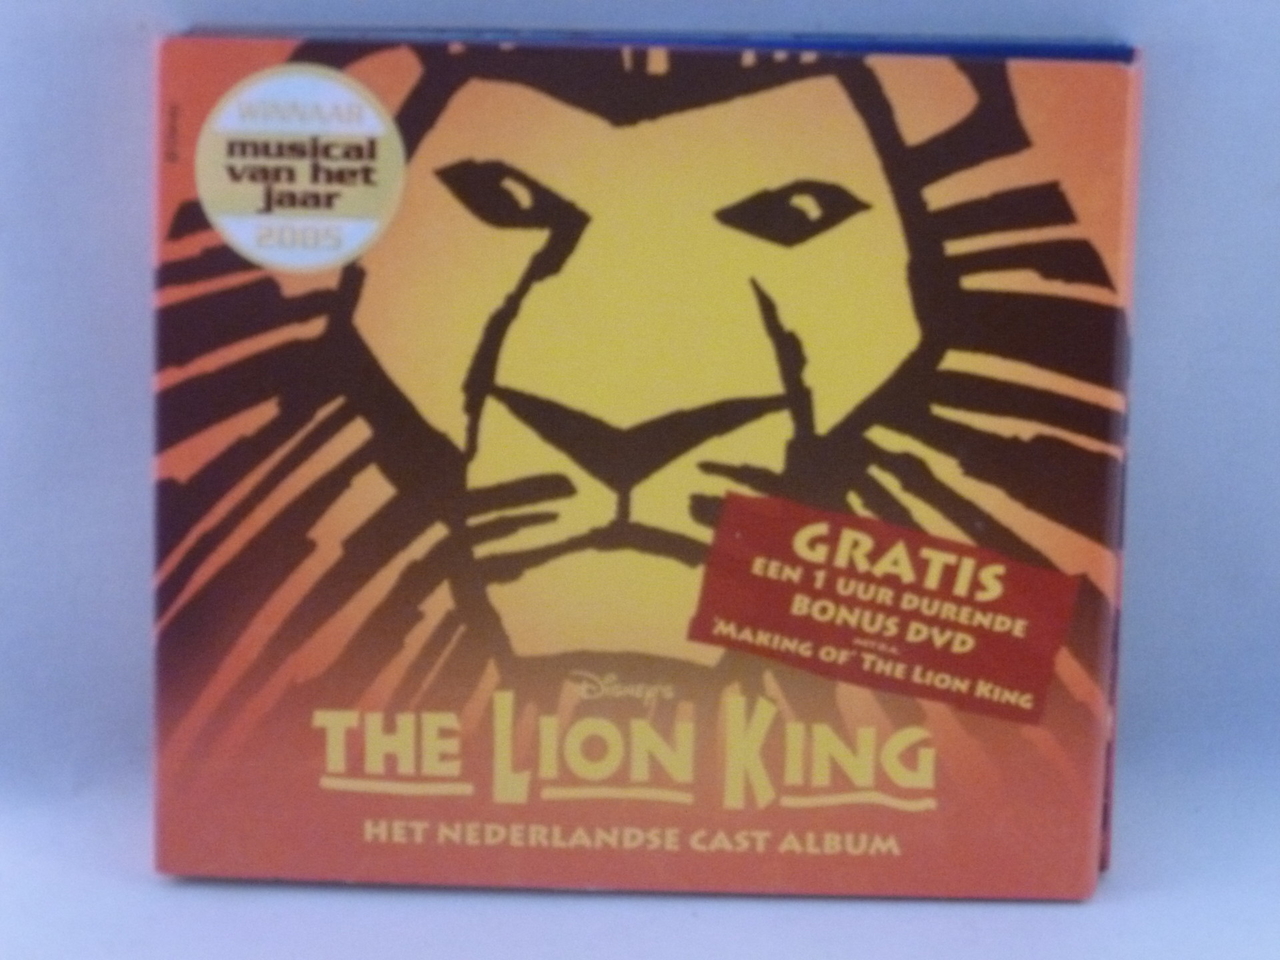 paddestoel calorie Sterkte The Lion King - Het Nederlandse Cast Album (CD + DVD) - Tweedehands CD